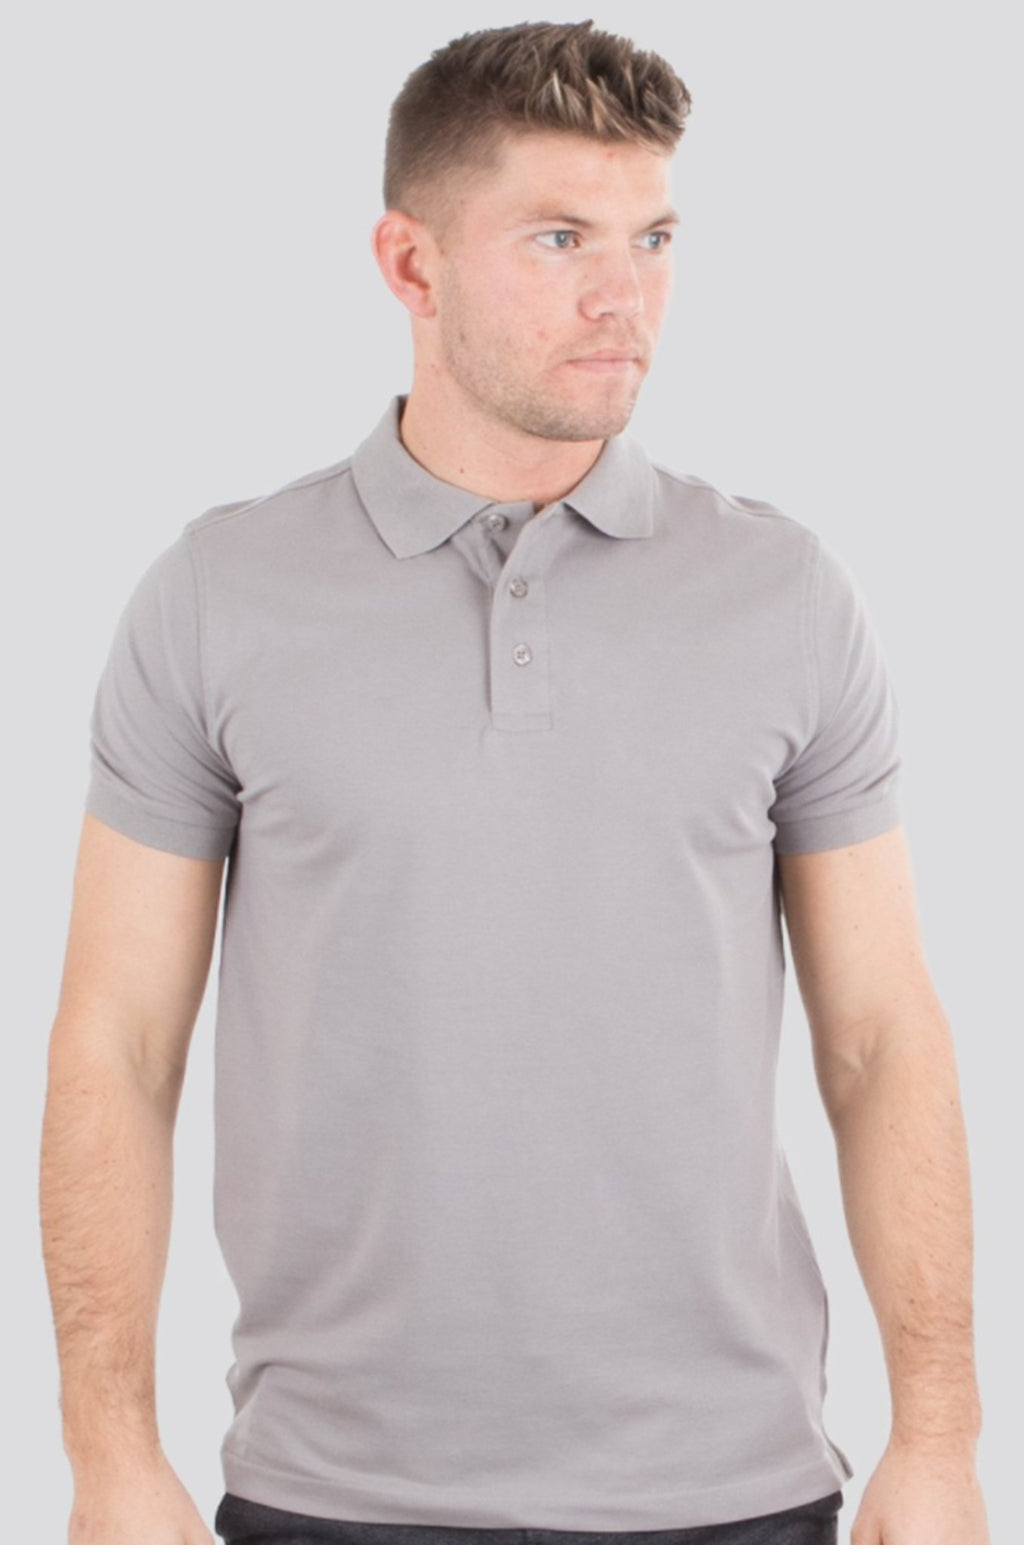 Shirt polo di base - grigio